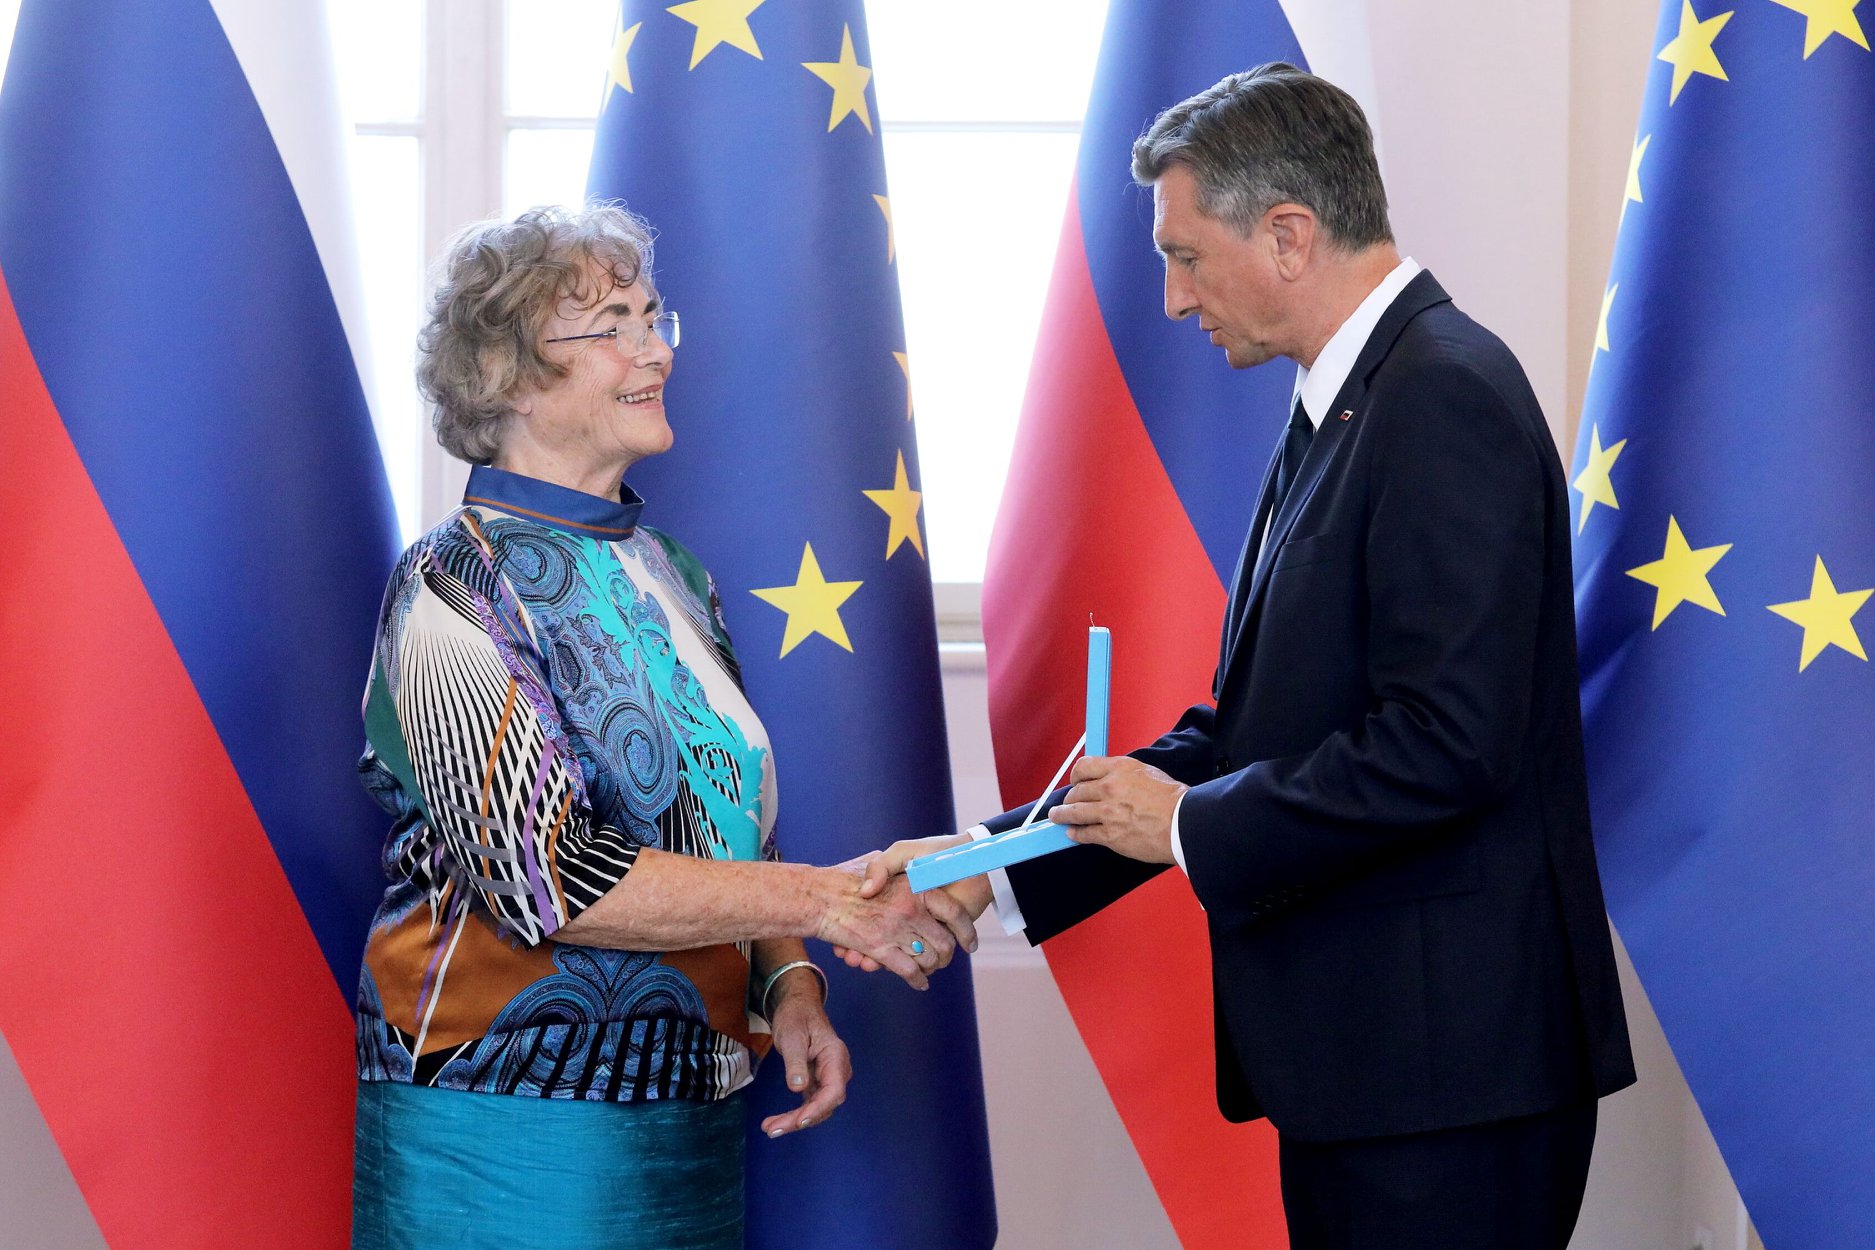 Predsednik RS Borut Pahor državno odlikovanje - red za zasluge dr. Ani Krajnc podeljuje 